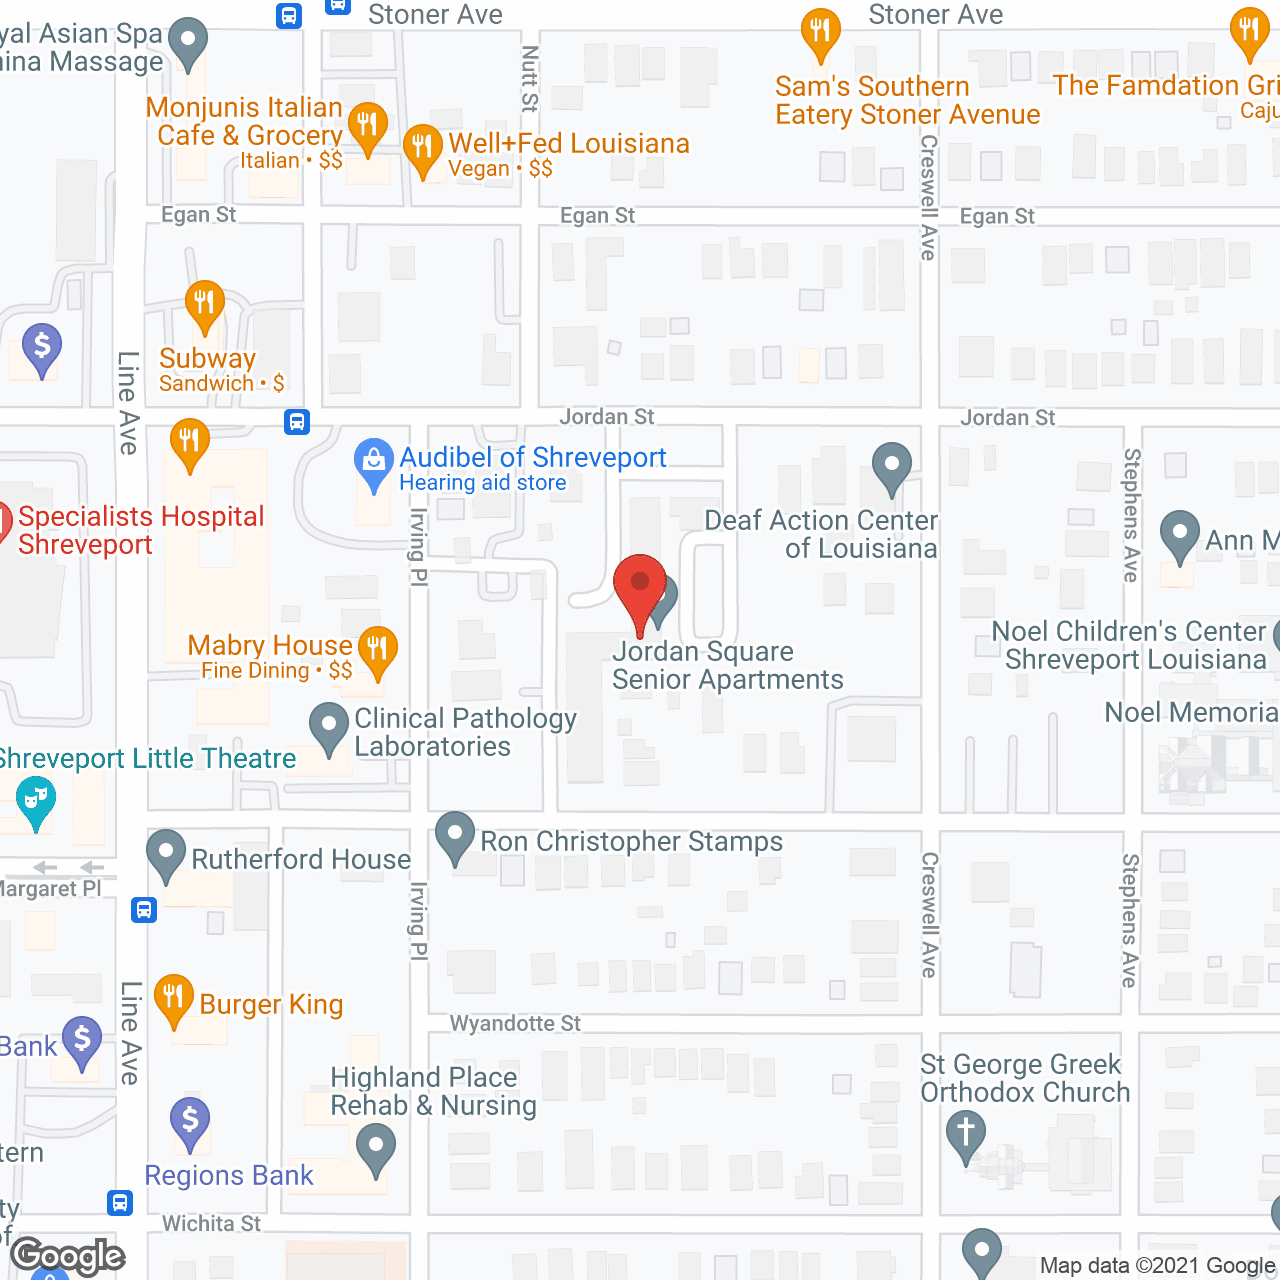 Jordan Square Senior Apartments in google map